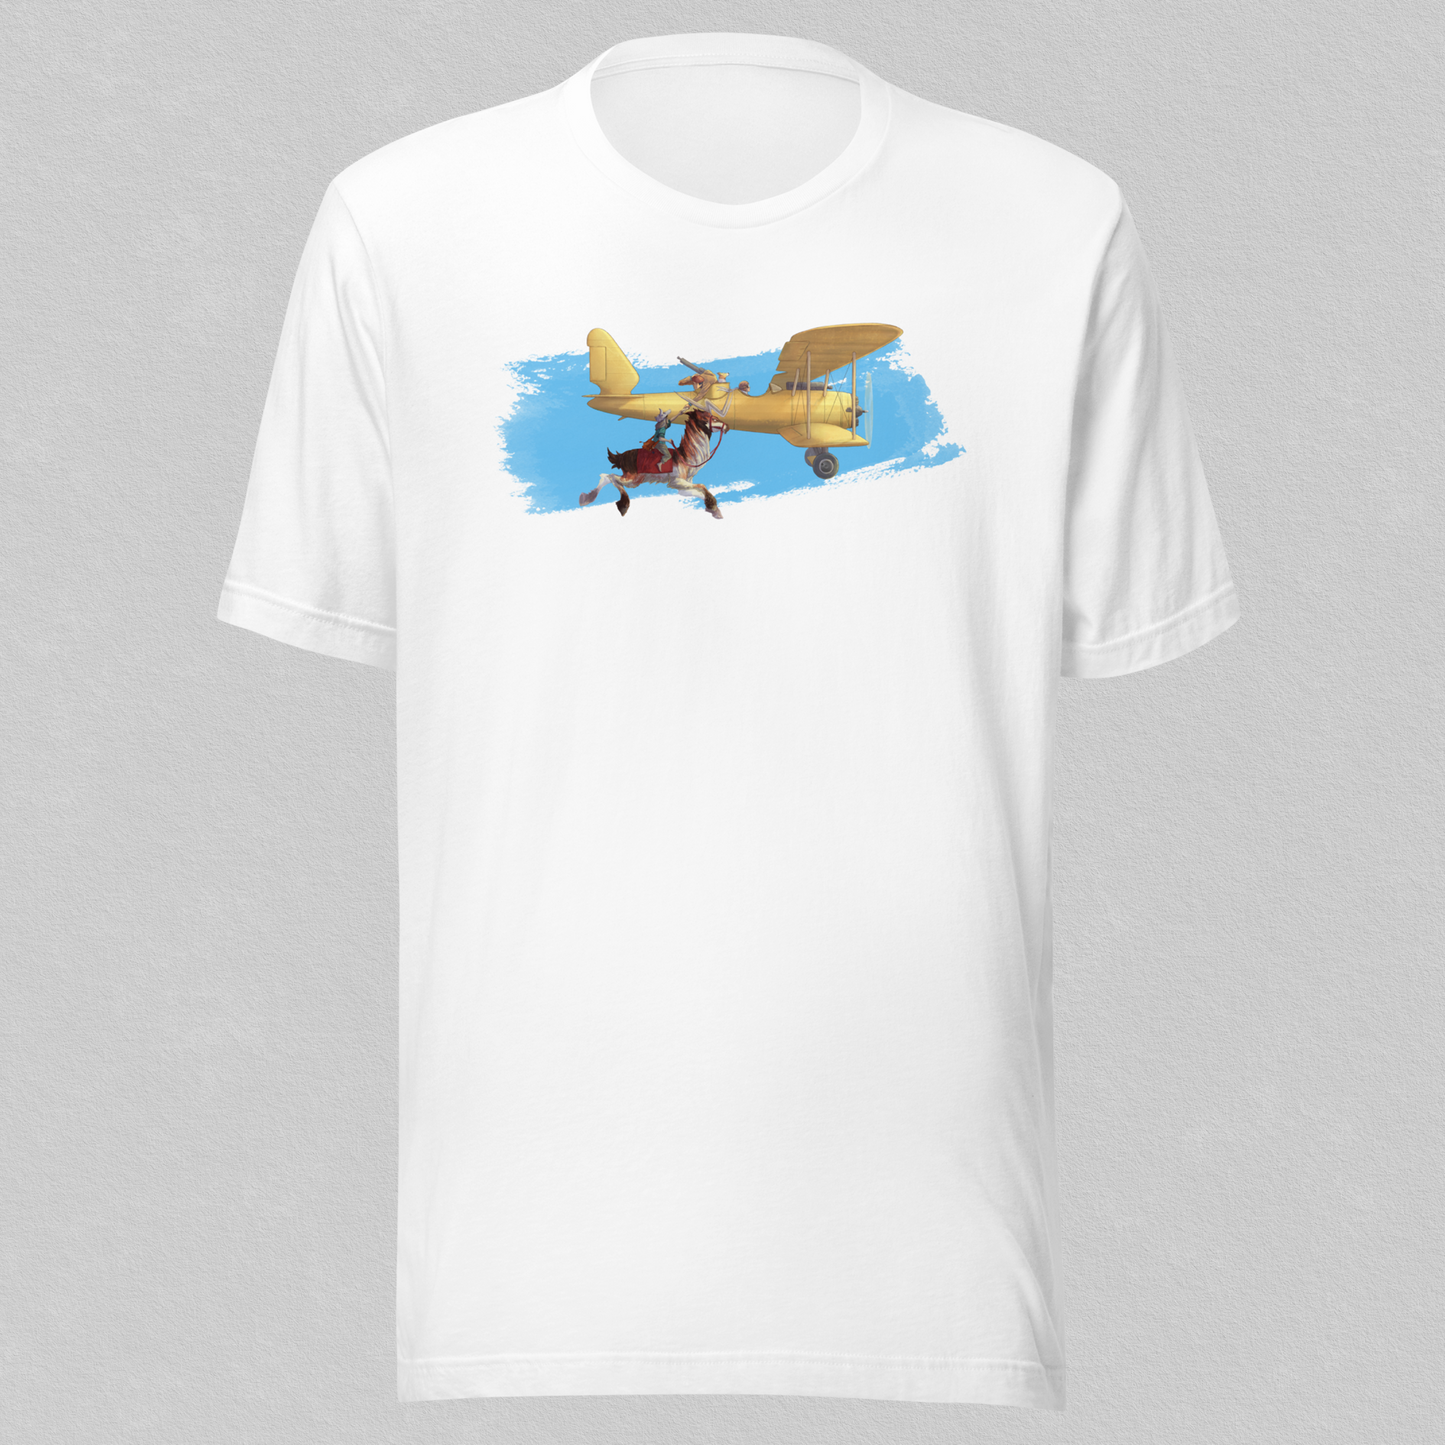 Take Flight T-Shirt